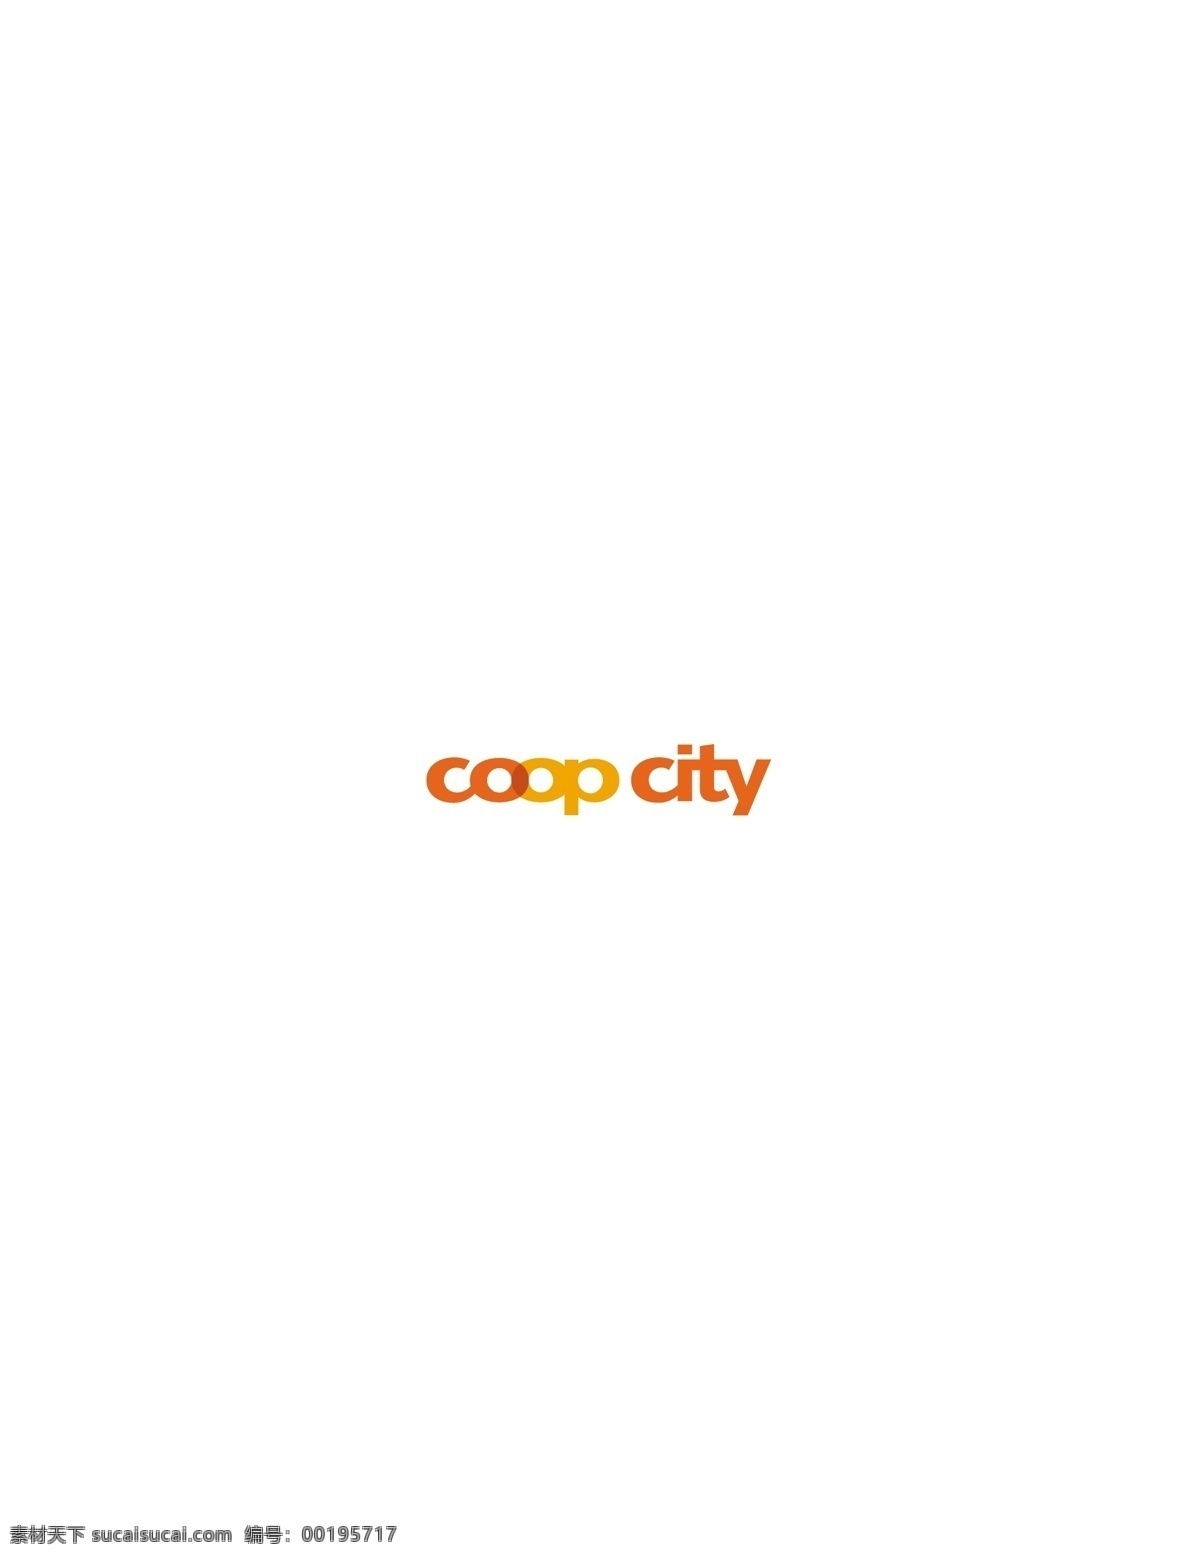 logo大全 logo 设计欣赏 商业矢量 矢量下载 coopcity1 知名 饮料 标志 标志设计 欣赏 网页矢量